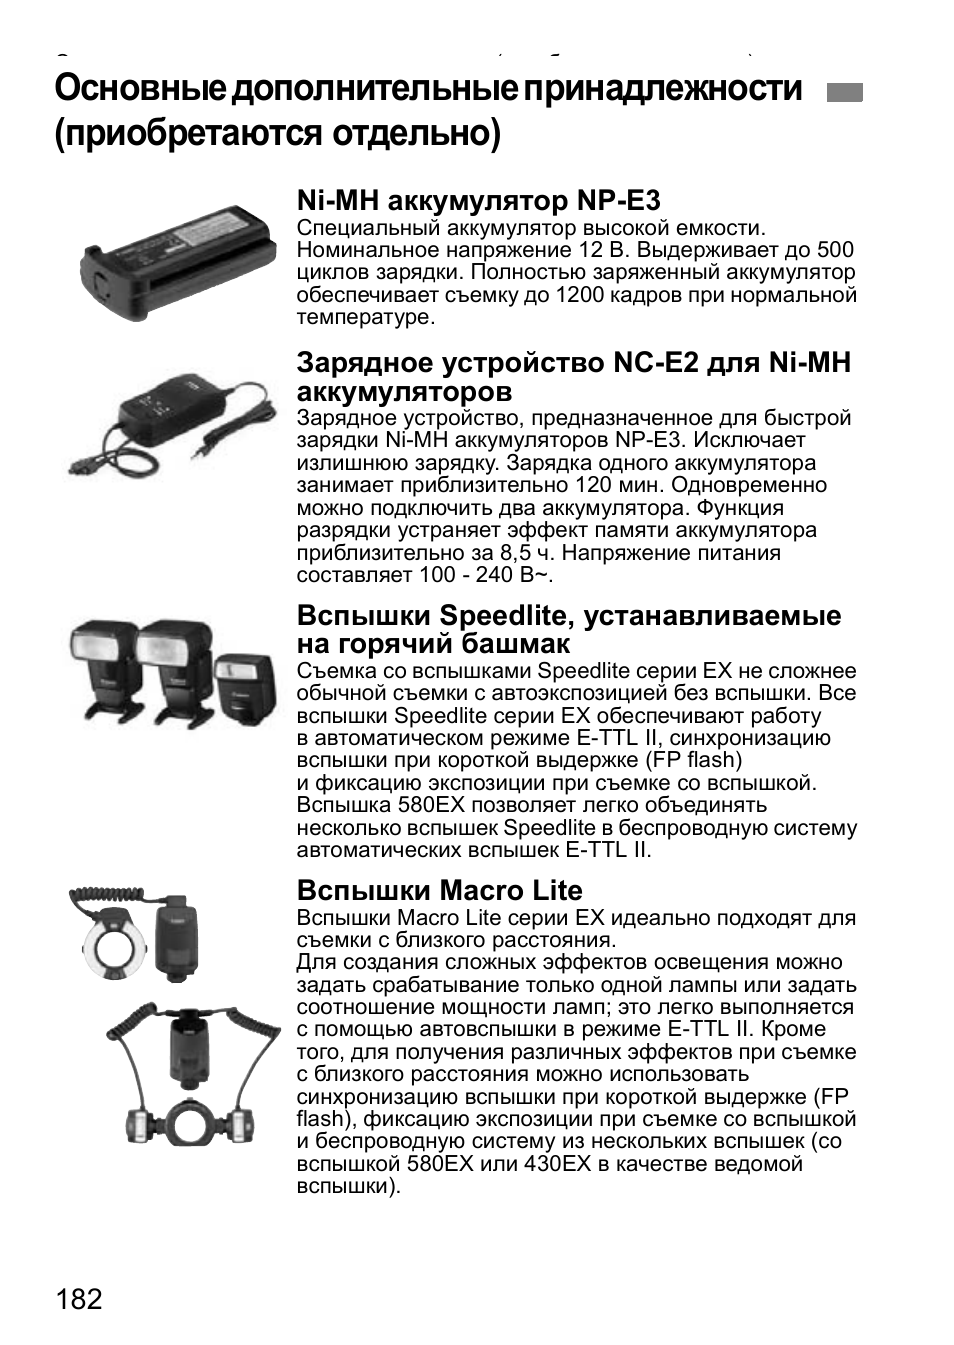 Ni-mh аккумулятор np-e3, Зарядное устройство nc-e2 для ni-mh аккумуляторов, Вспышки macro lite | Инструкция по эксплуатации Canon EOS 1D Mark II N | Страница 182 / 196